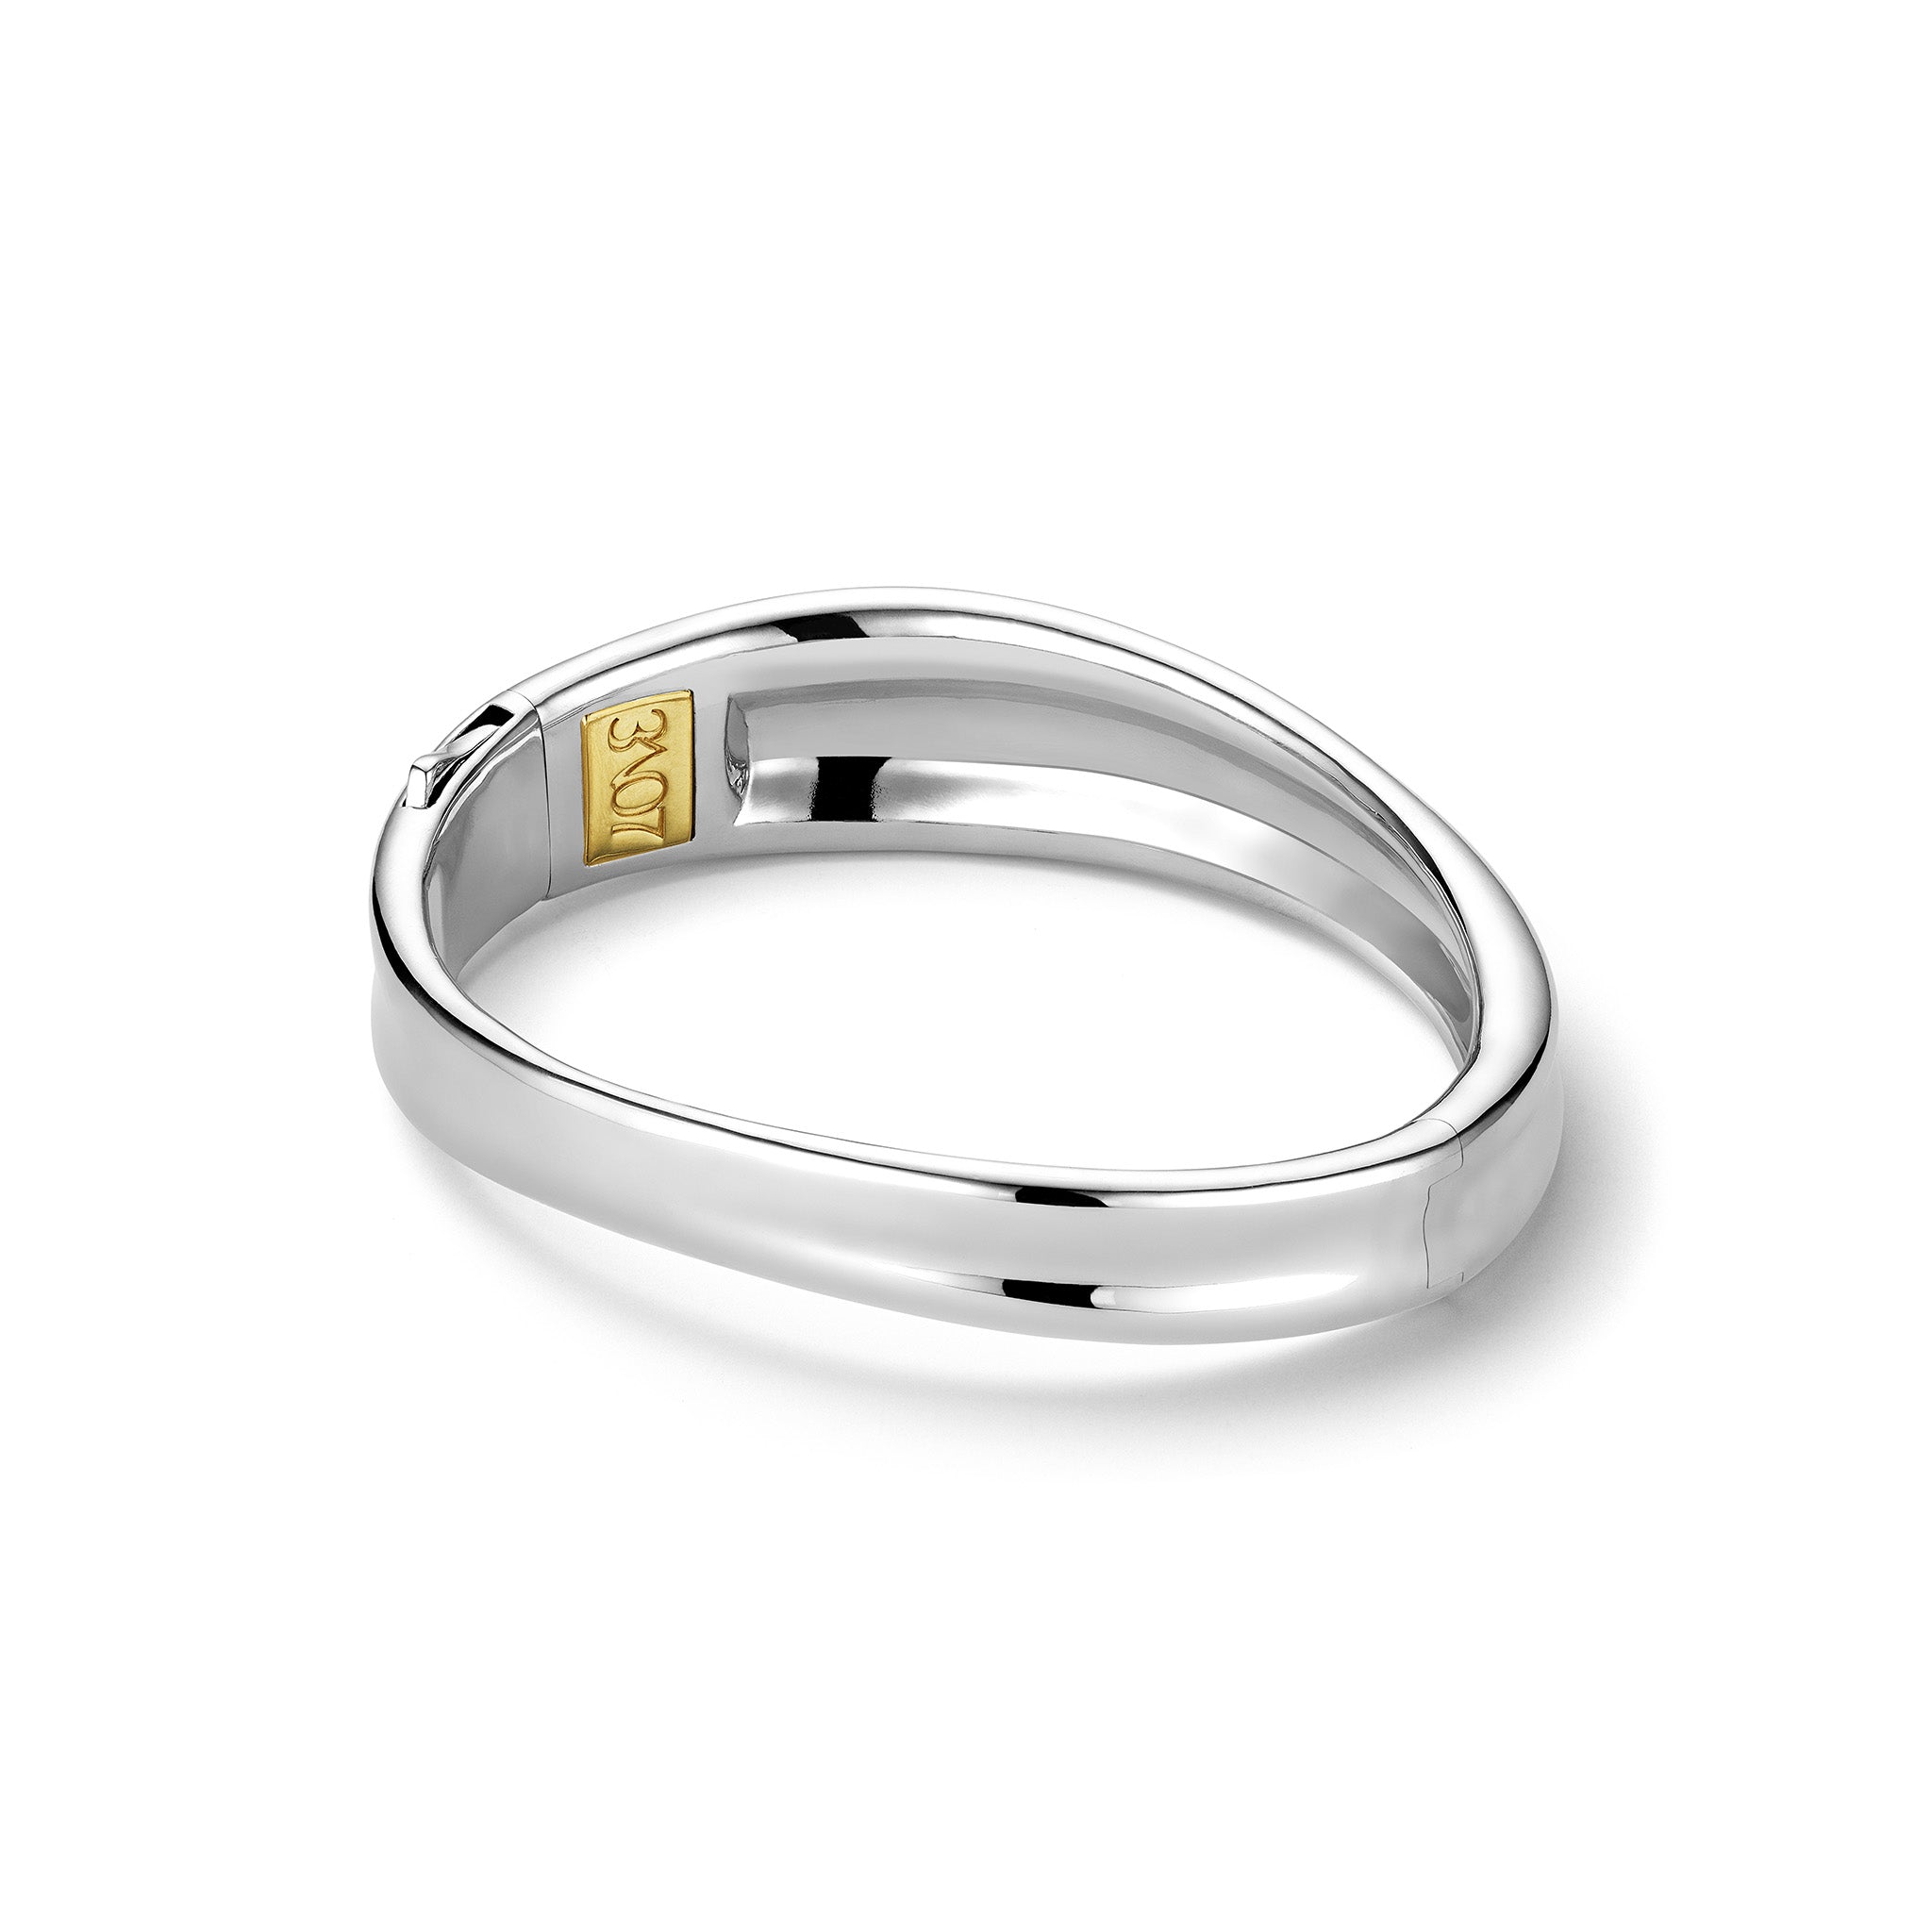 Eros 3707 Bangle Bracelet with 18K Gold Vermeil